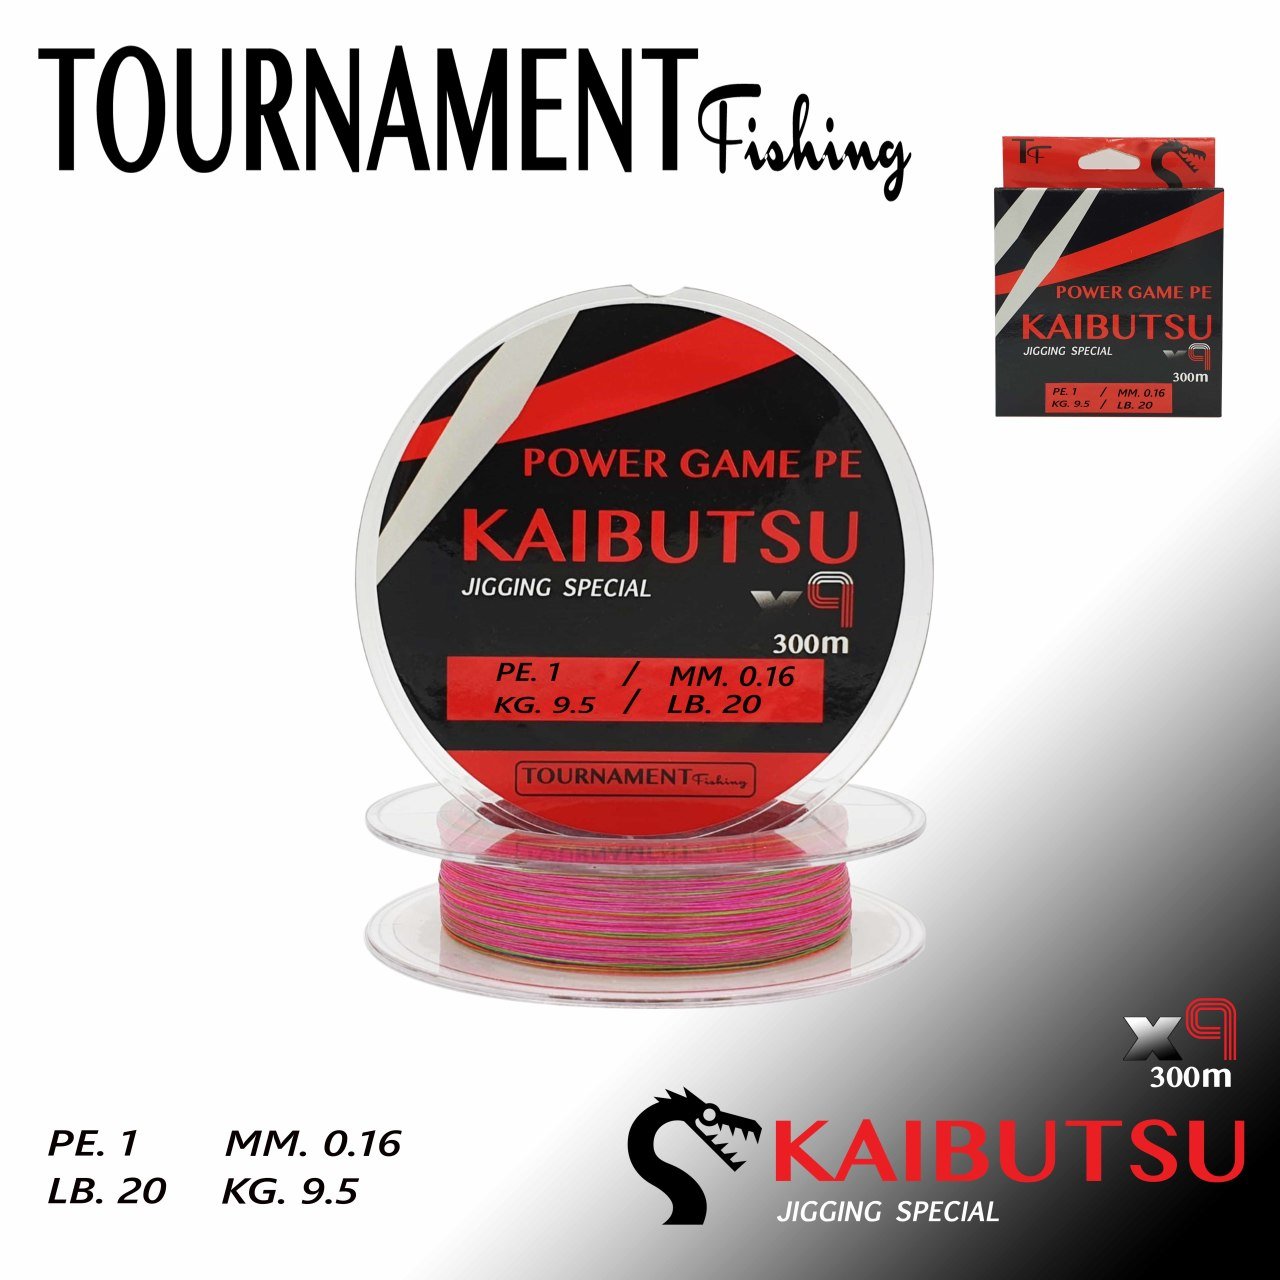 TOURNAMENT fishing Power game pe KAIBUTSU Jigging Special X9 PE.1 /MM0.16 KG9.5/LB.20